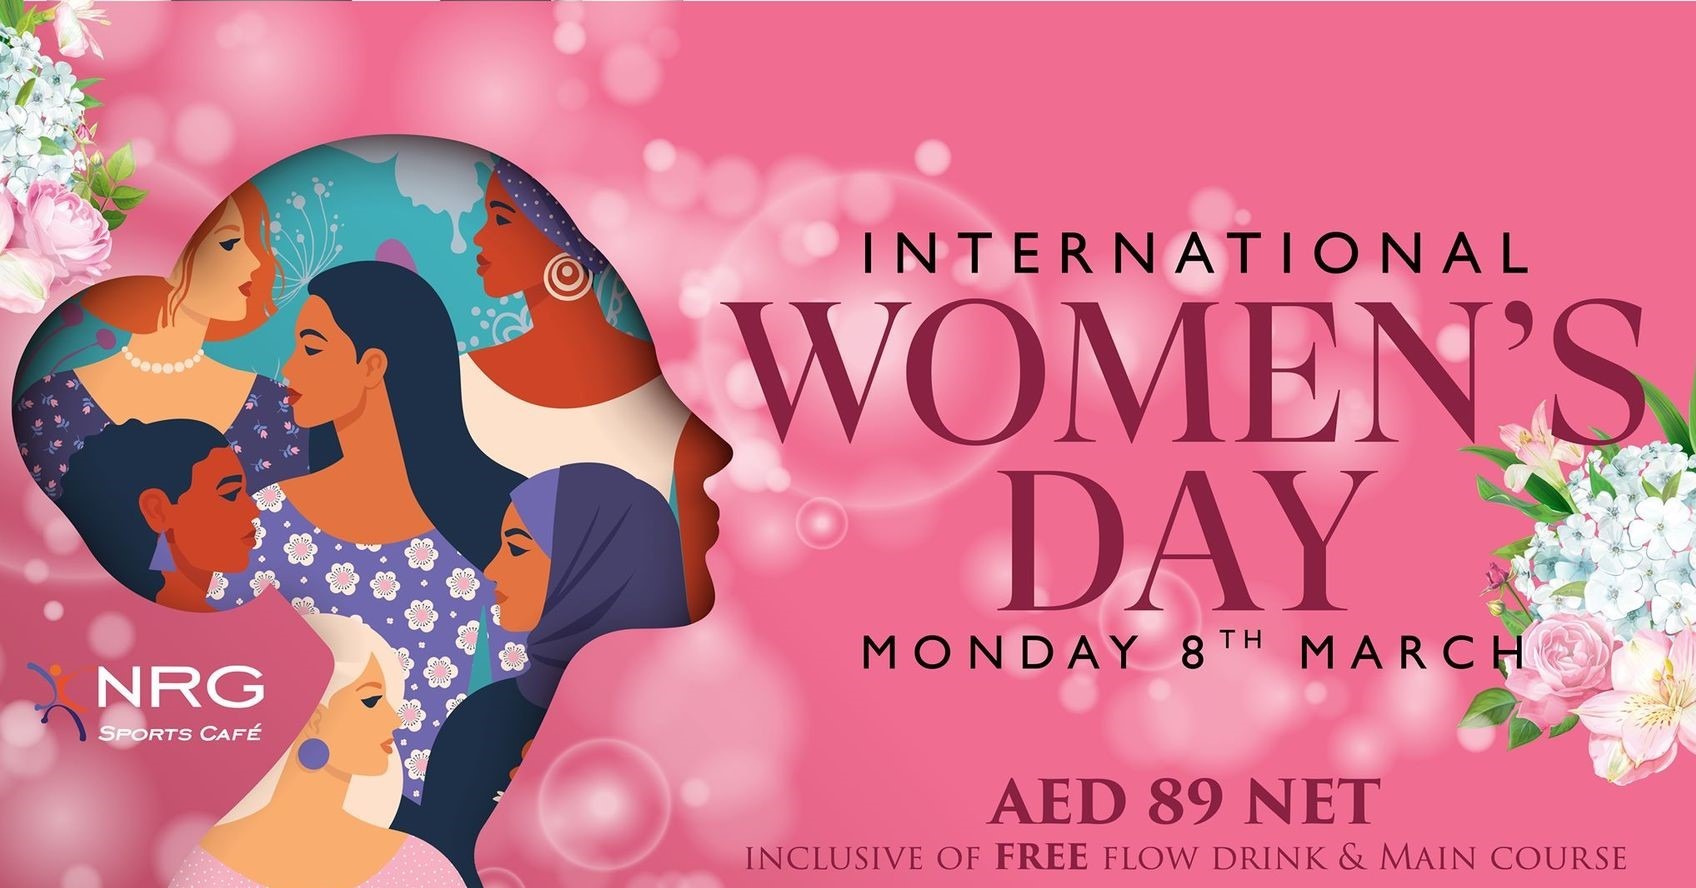 International Women’s Day in Abu Dhabi - Coming Soon in UAE